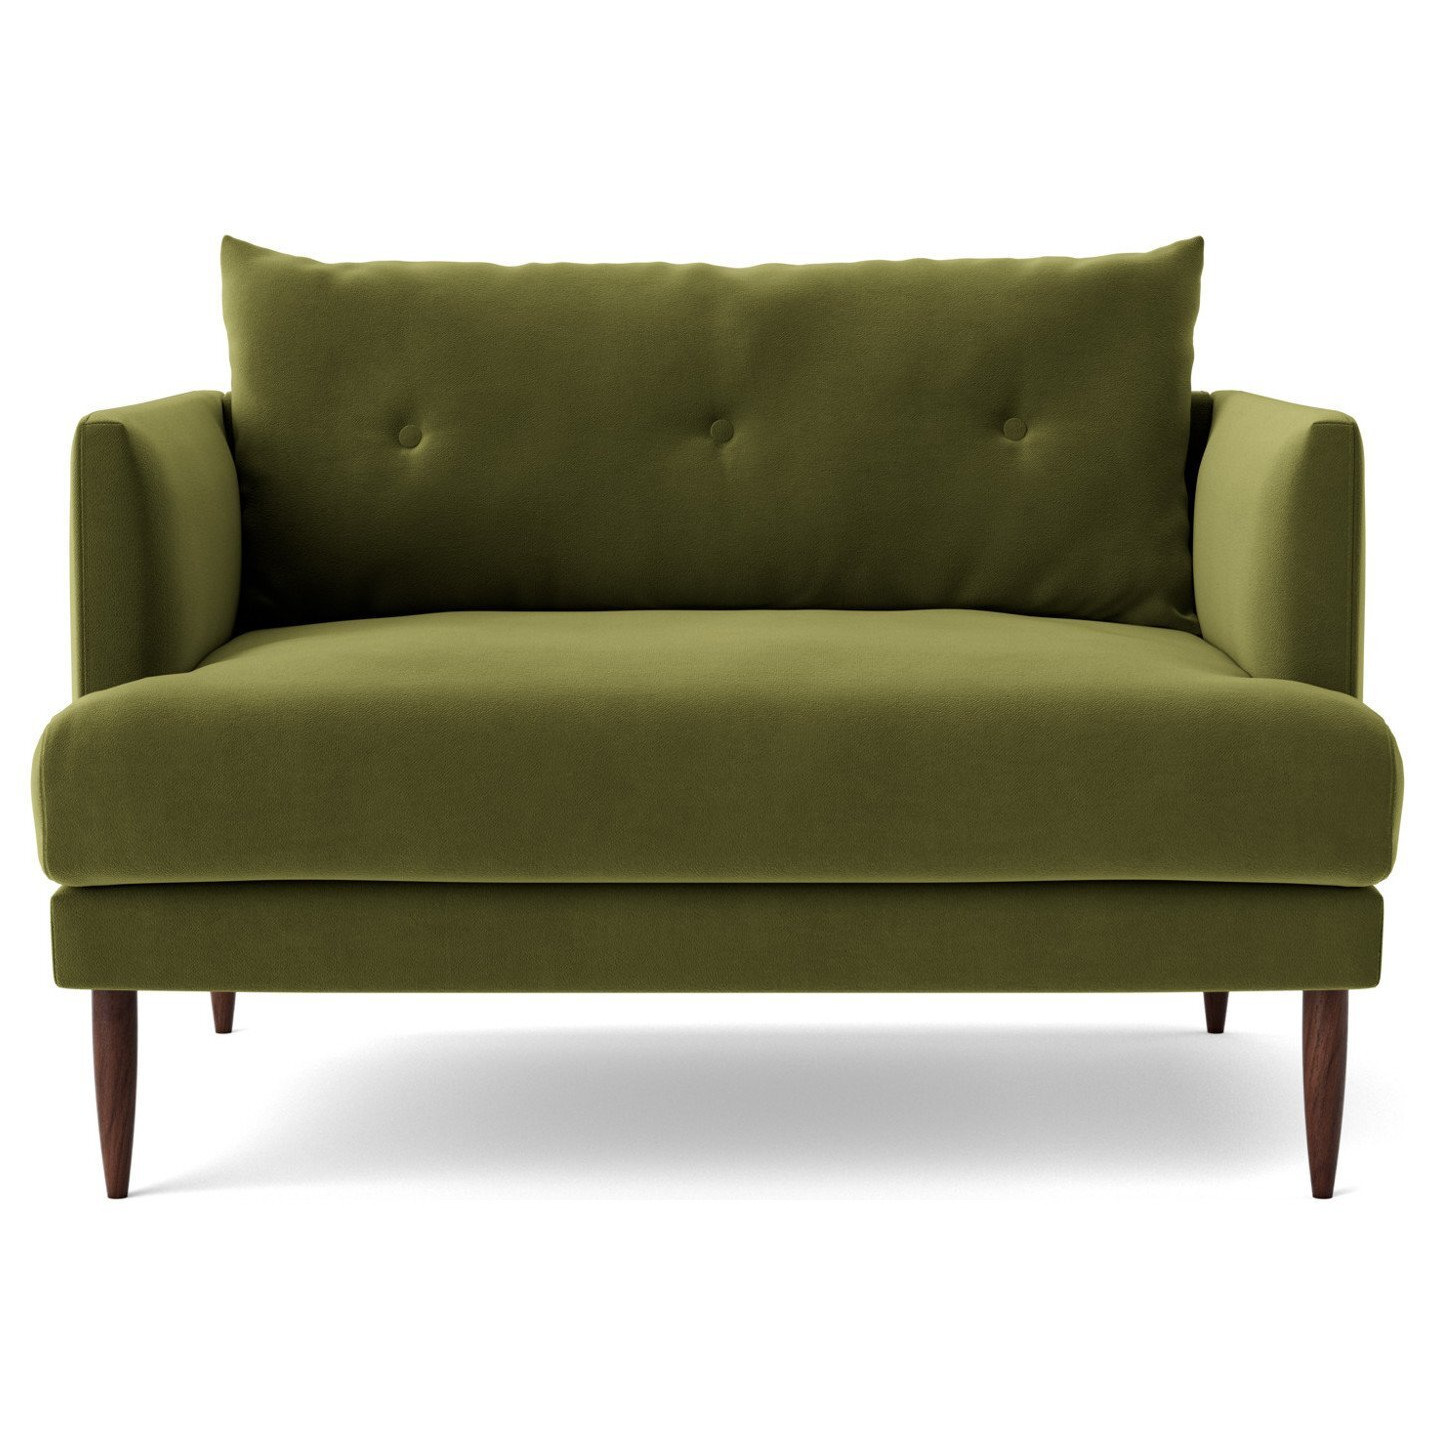 Swoon Kalmar Velvet Cuddle Chair - Fern Green